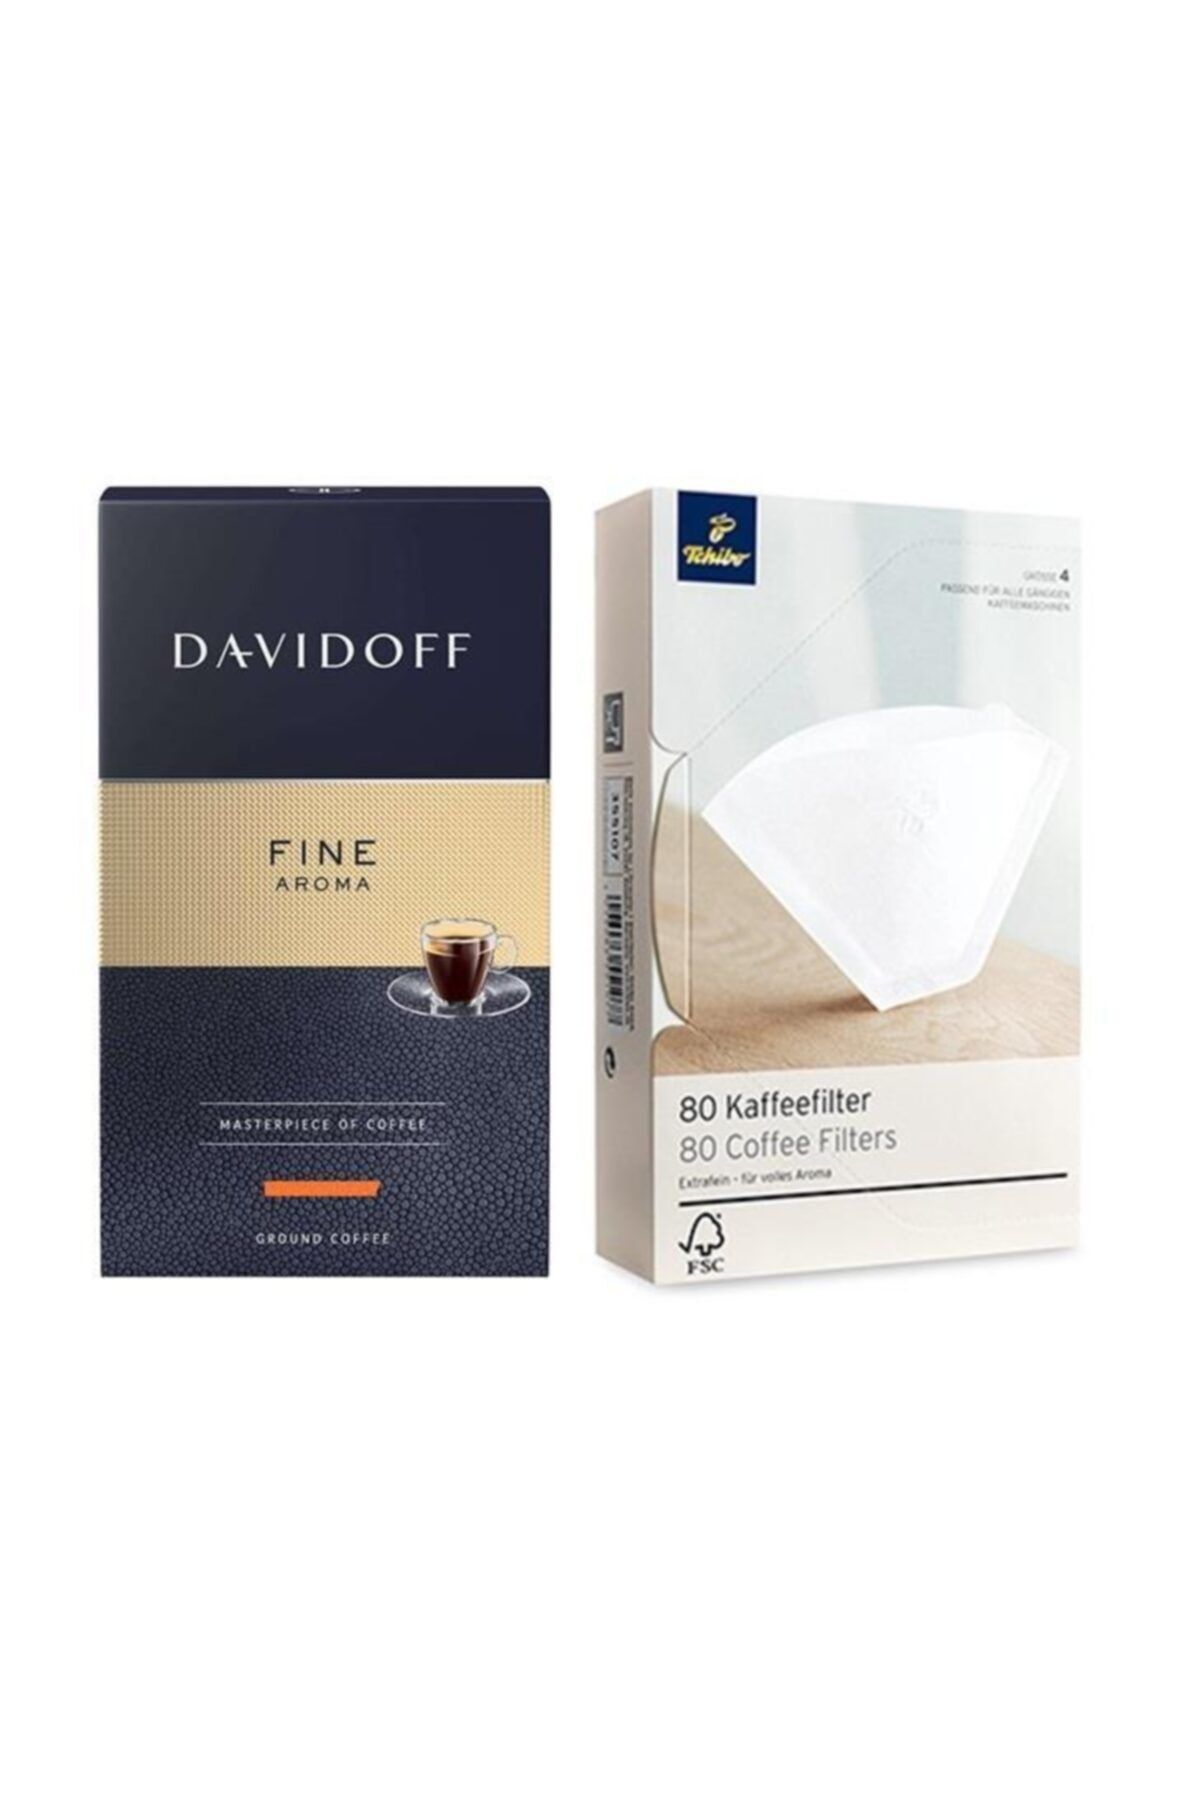 Davidoff Fine Aroma Öğütülmüş Filtre Kahve 250g - 80 Adet Filtre Kahve Kağıdı